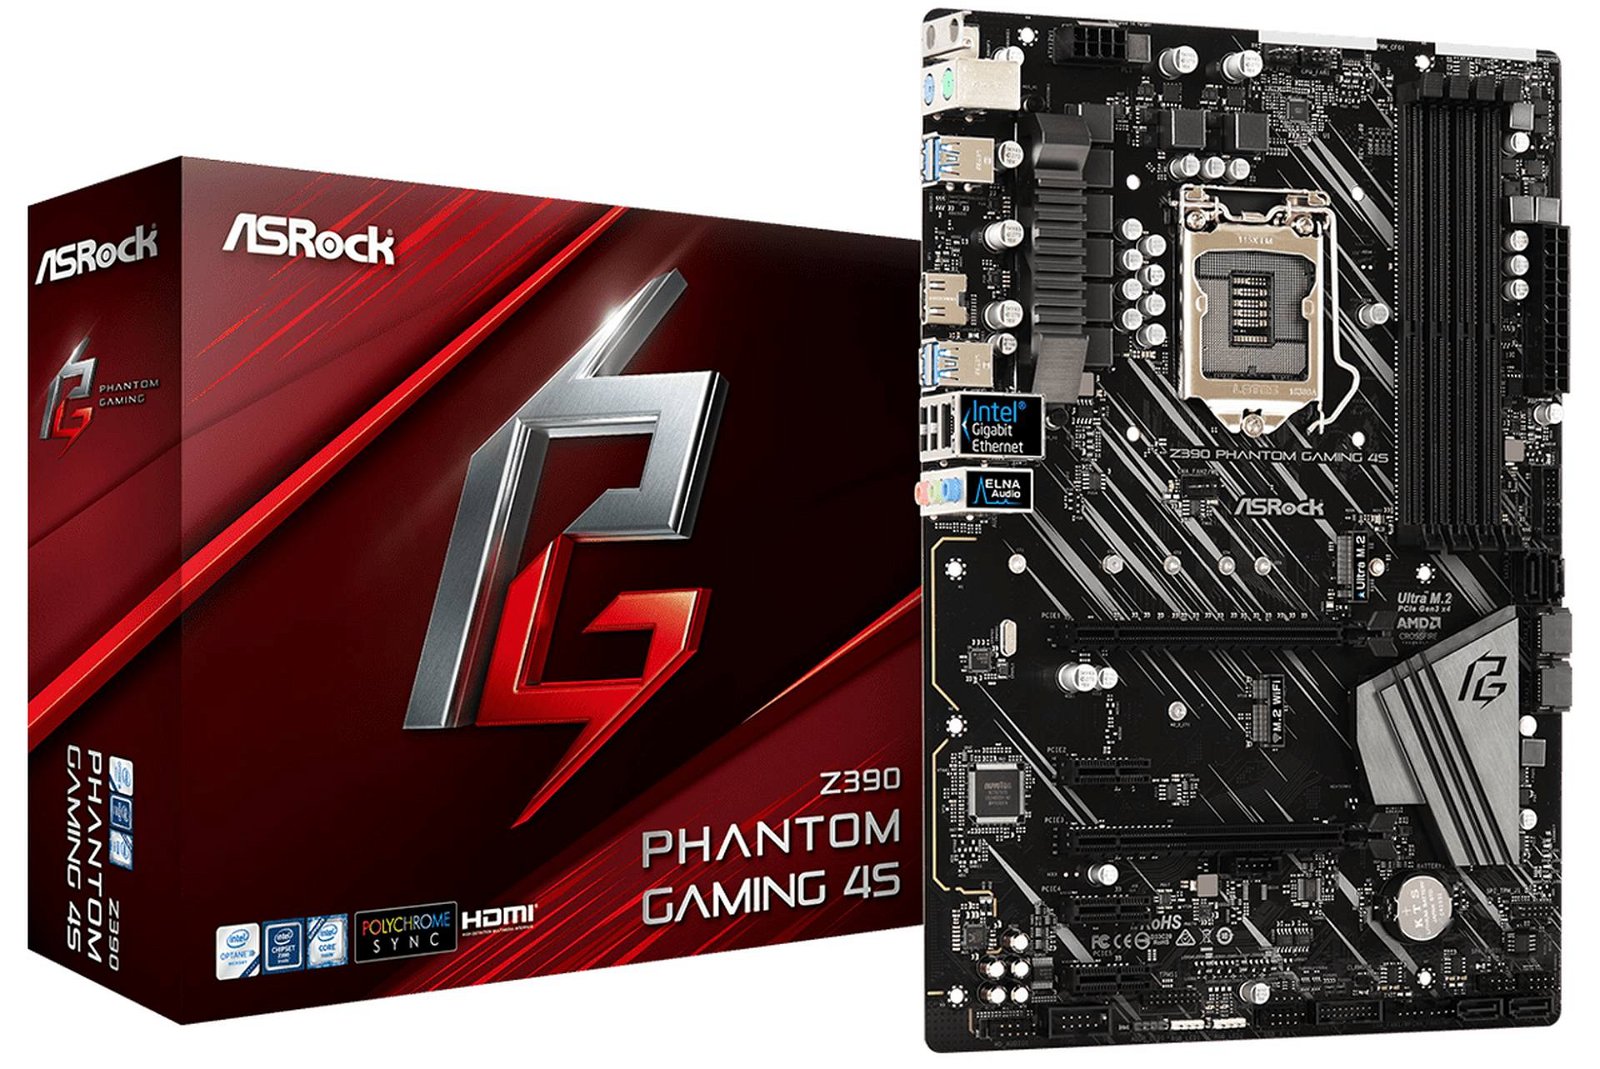 Immagine di ASRock Z390 Phantom Gaming 4S, una nuova scheda madre "economica" per CPU Intel Core